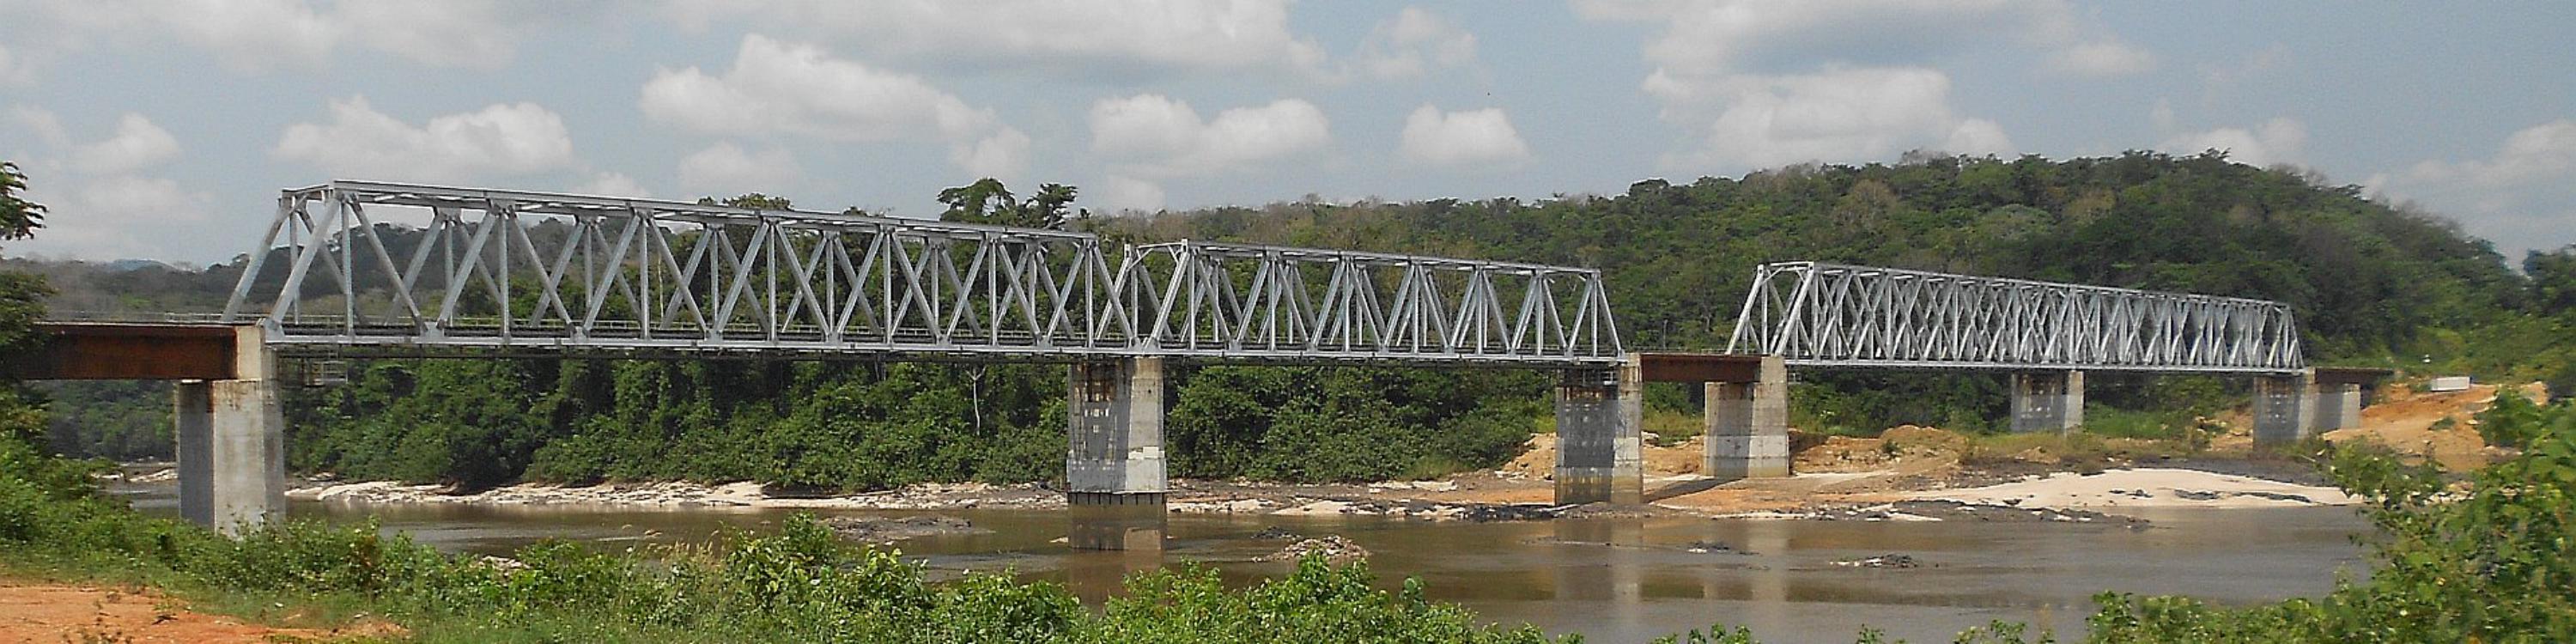 Expertise structurelle - Ponts ferroviaires au Gabon